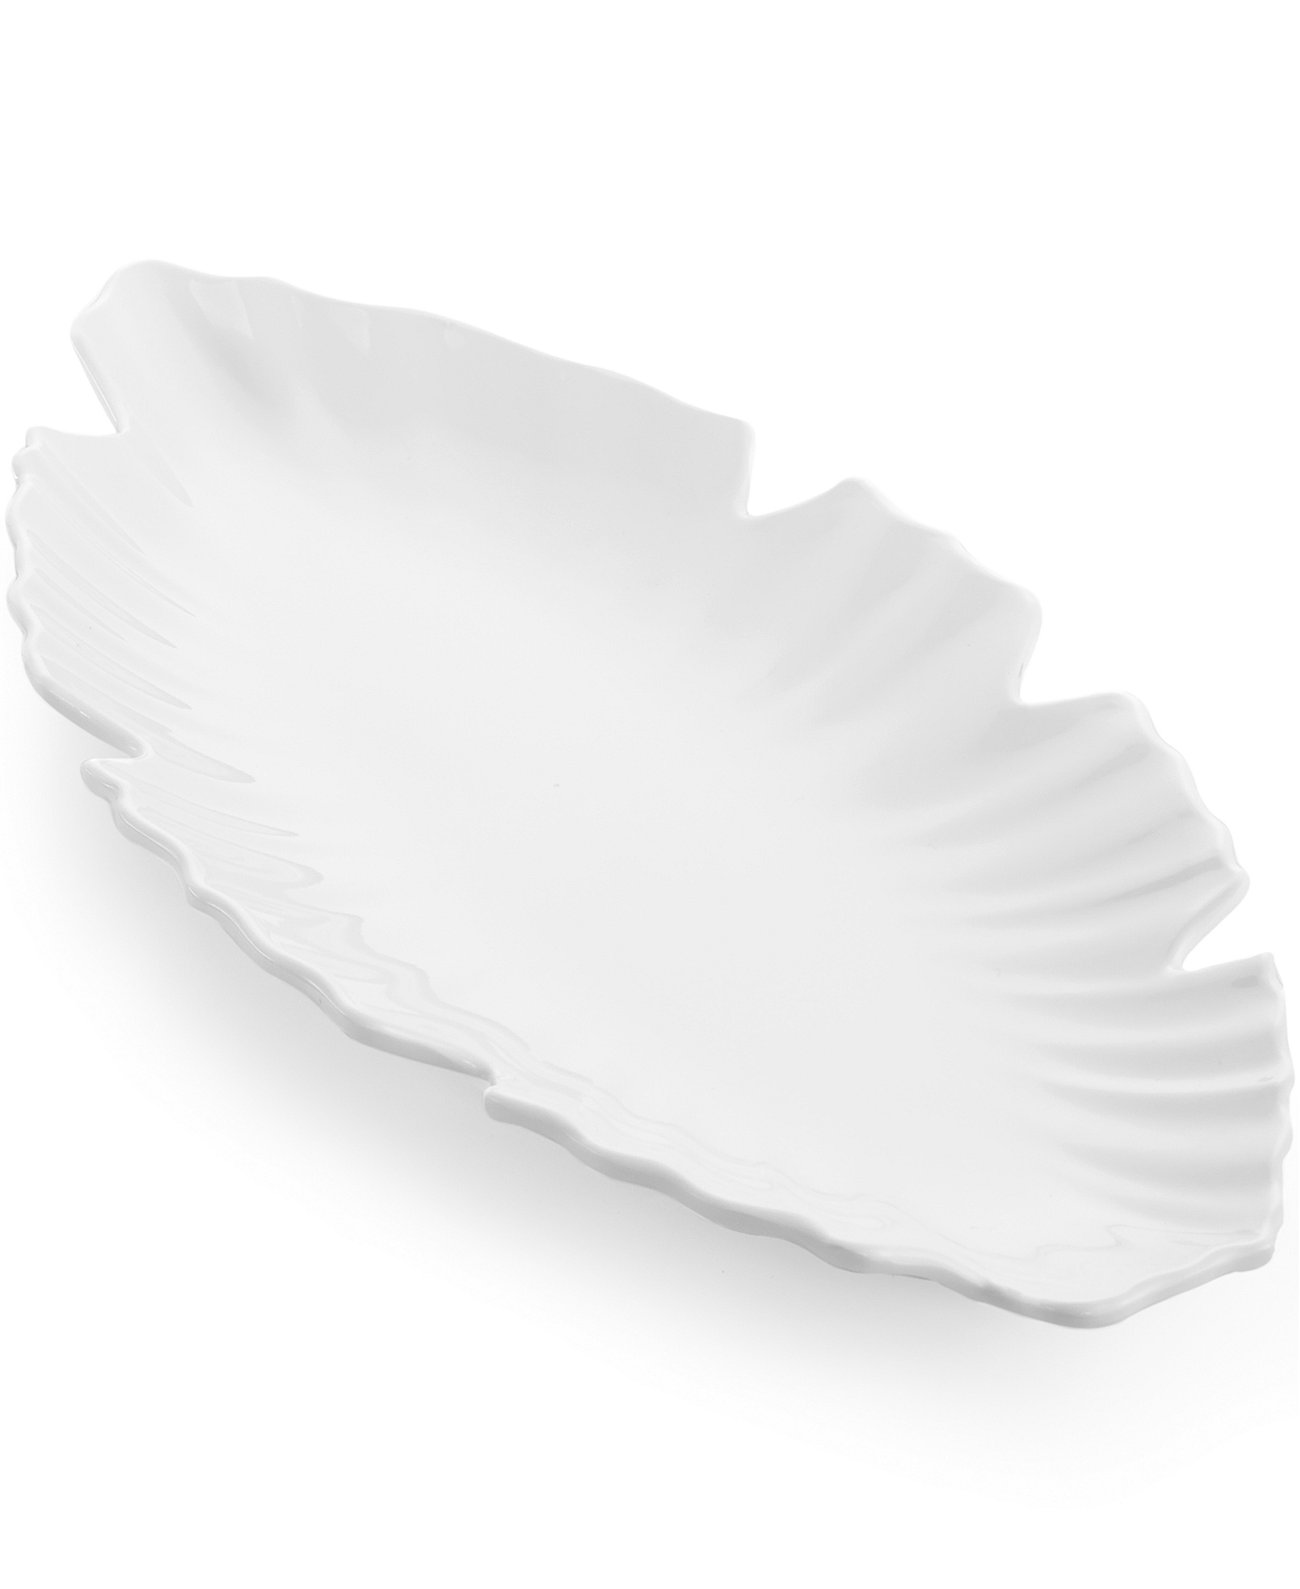 Дзен Меламиновая тарелка с маленькими белыми листьями Q Squared